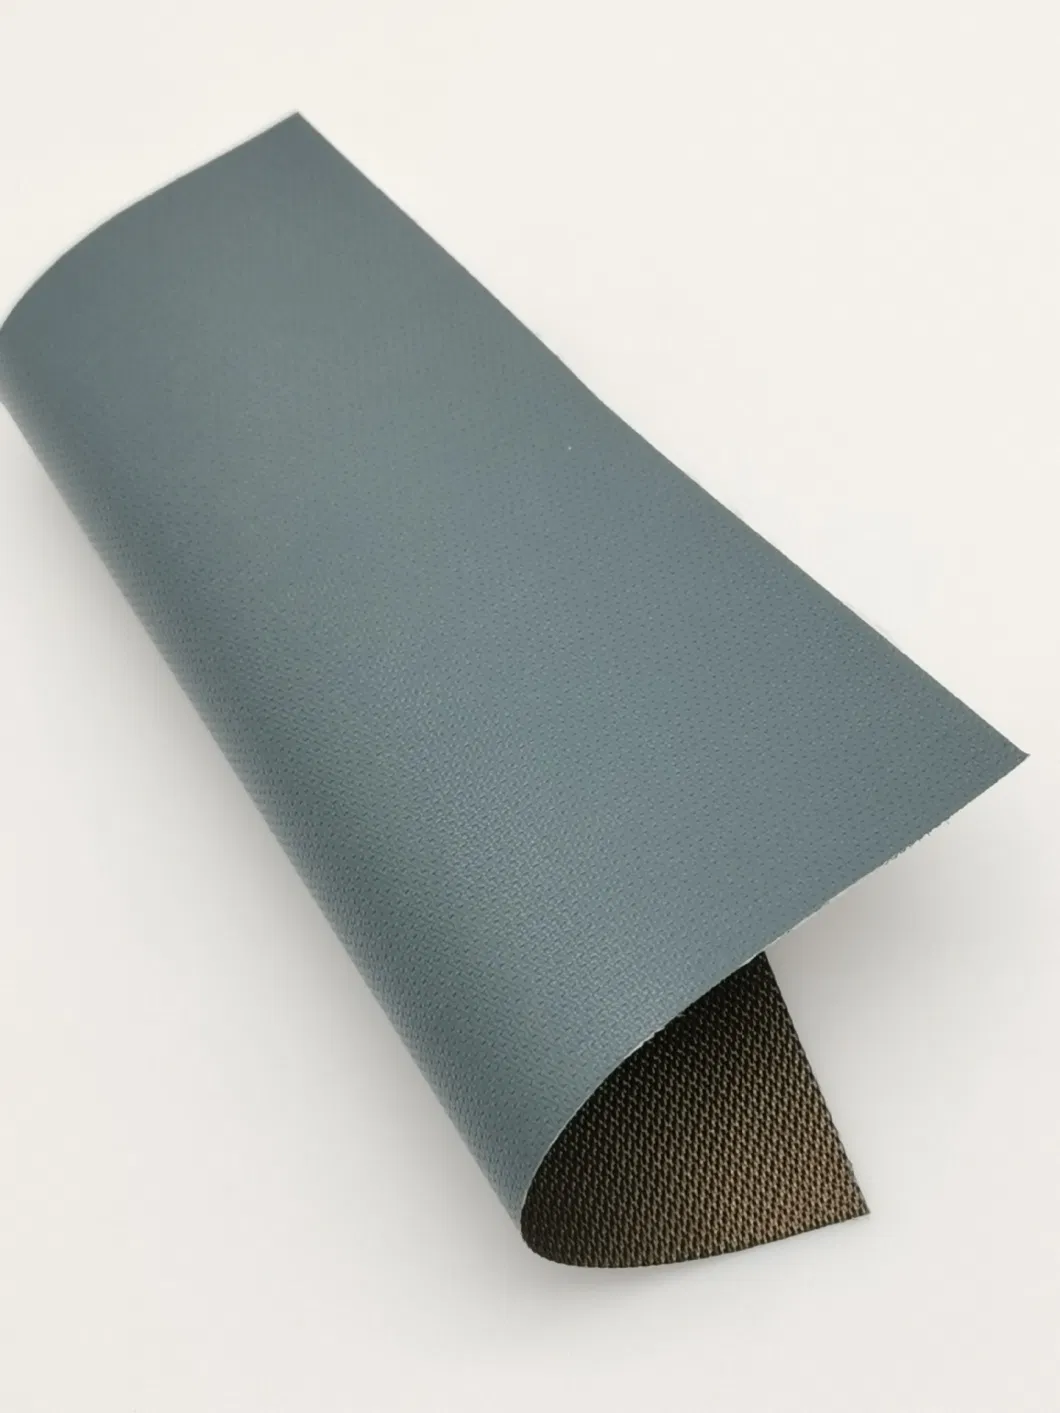 High Heat Resistance One Side PTFE Coated Fiberglass Fabric for Welding Blanket